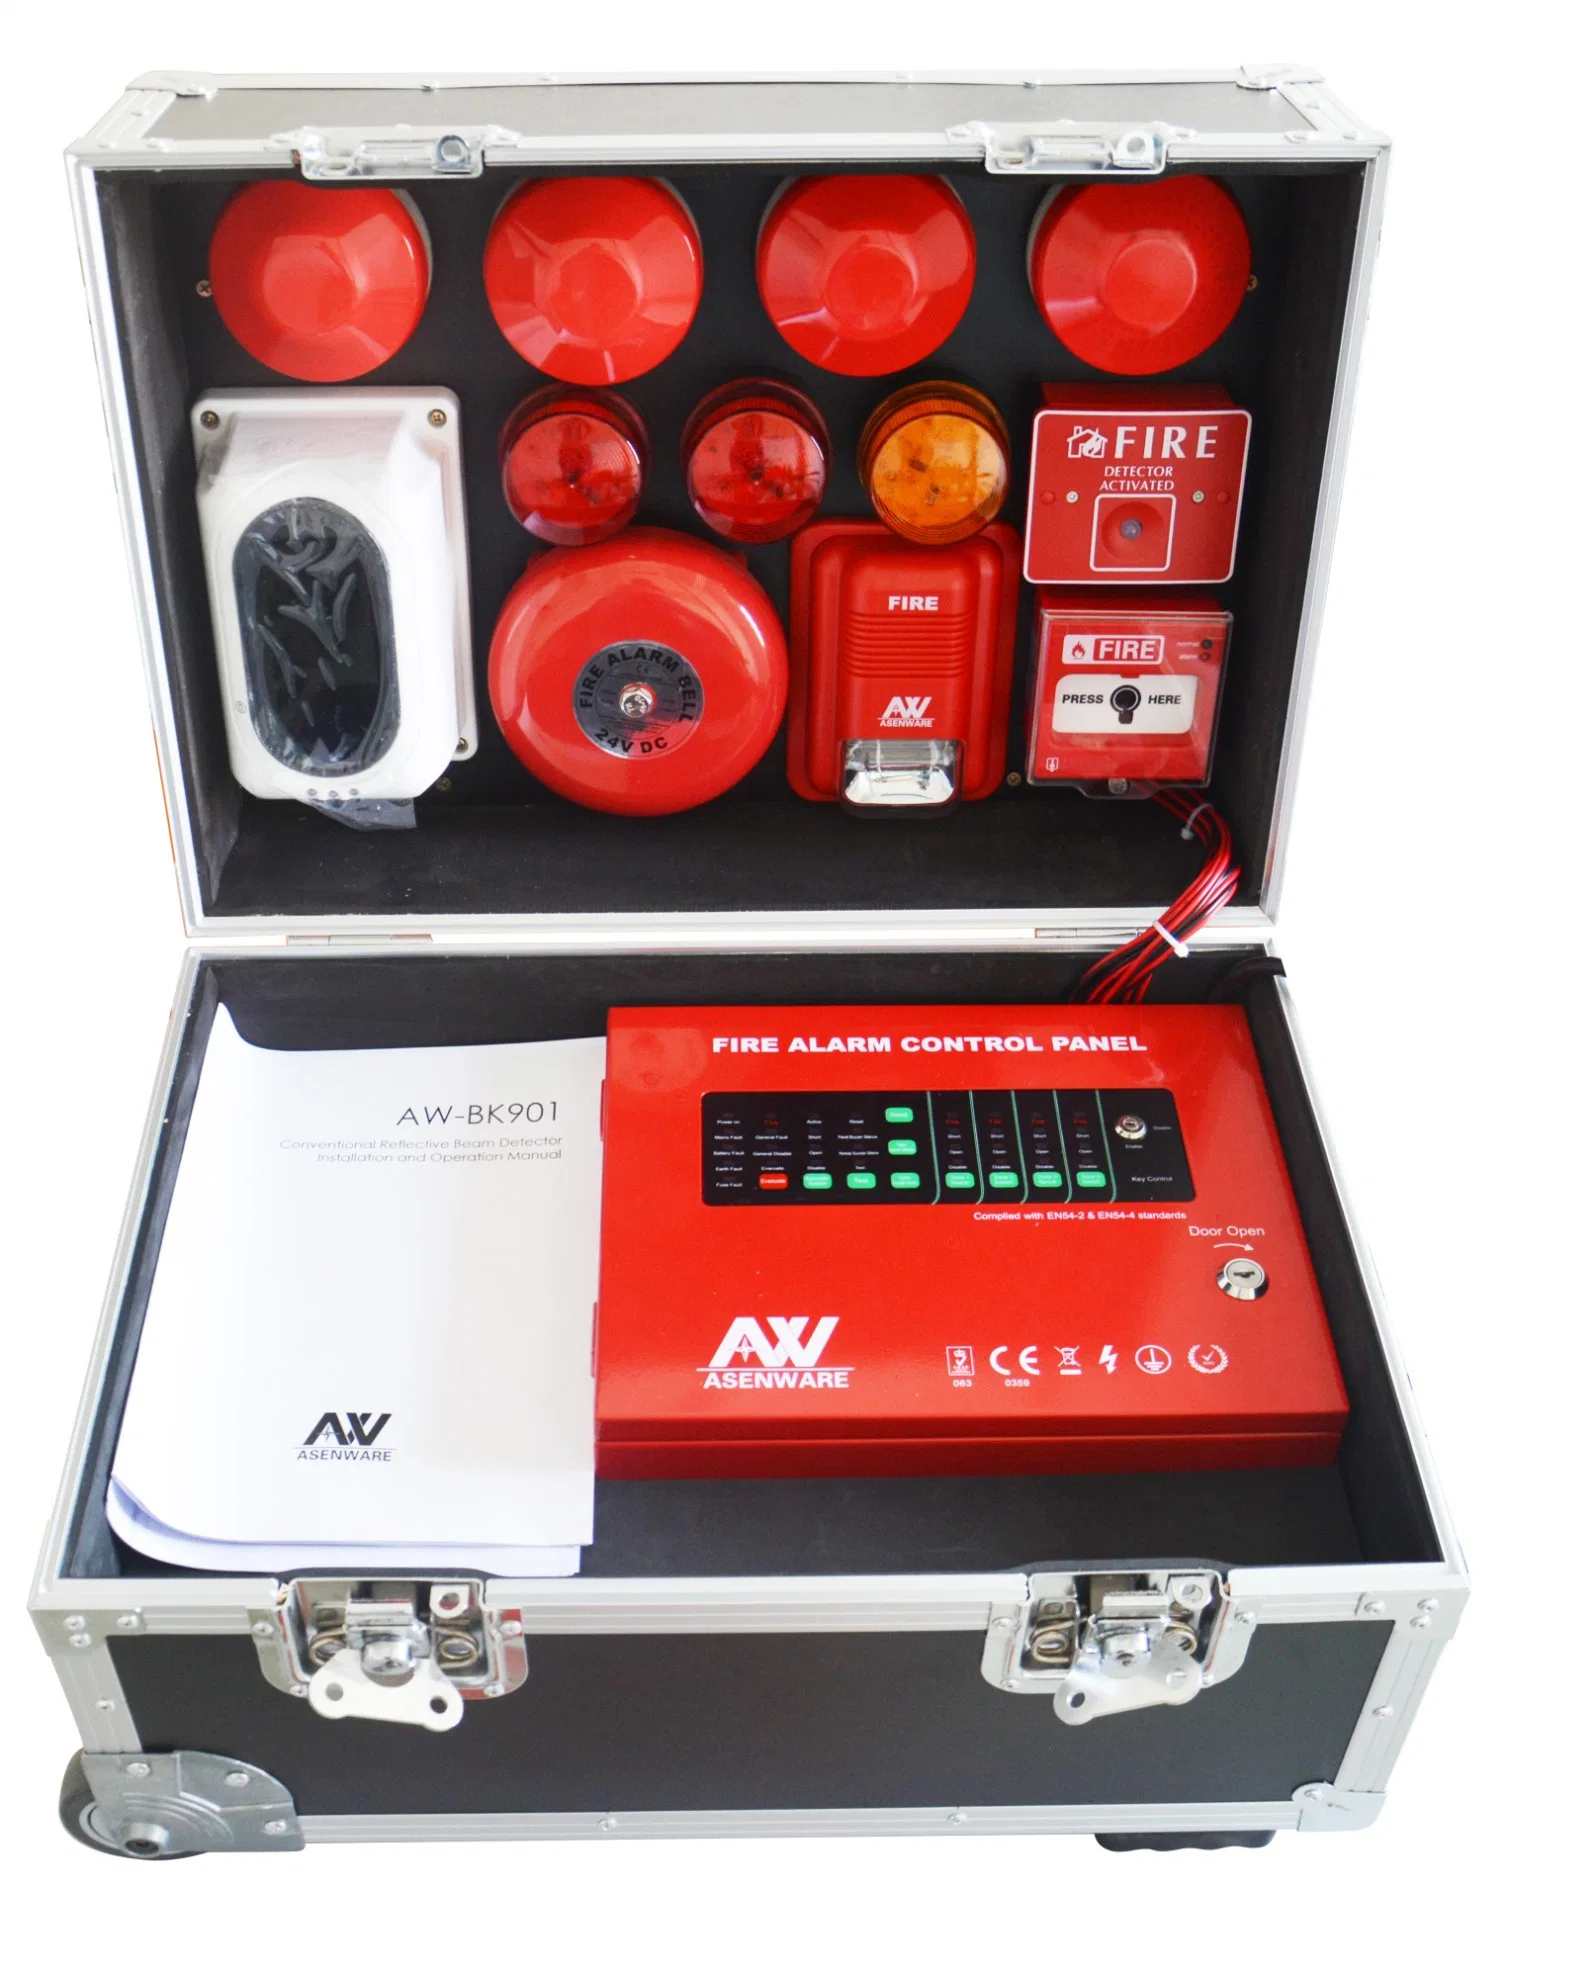 Lpcb Painel de controlo de alarme de incêndio convencional 1-32 zona Mostrar caixa/Demo Caixa/Showcase